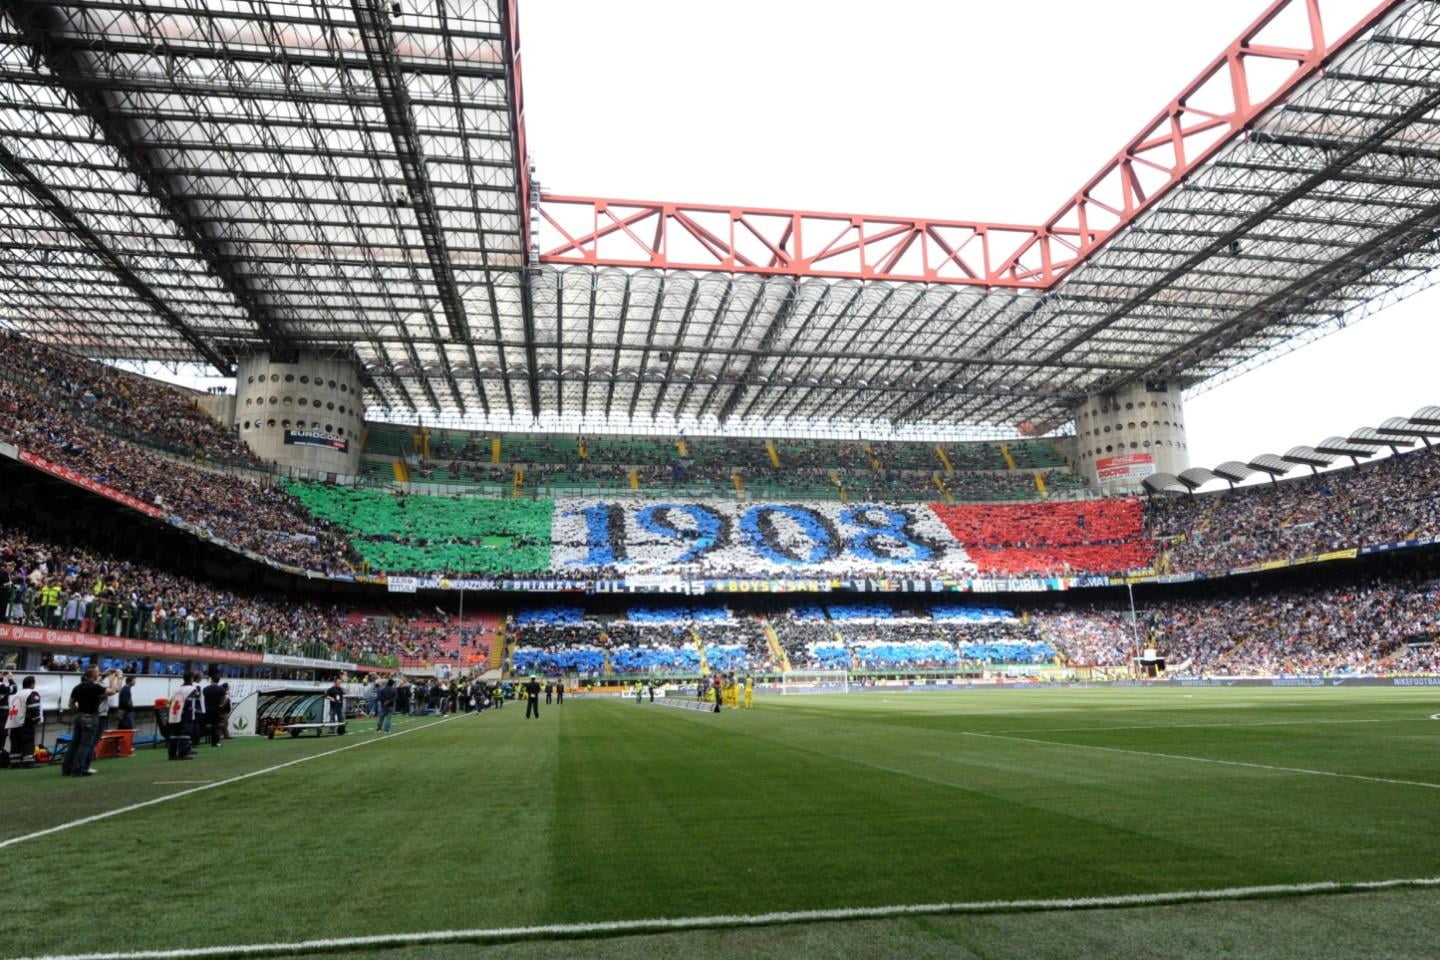 Inter Milan - Torino FC, 7 Aprilum 0:00